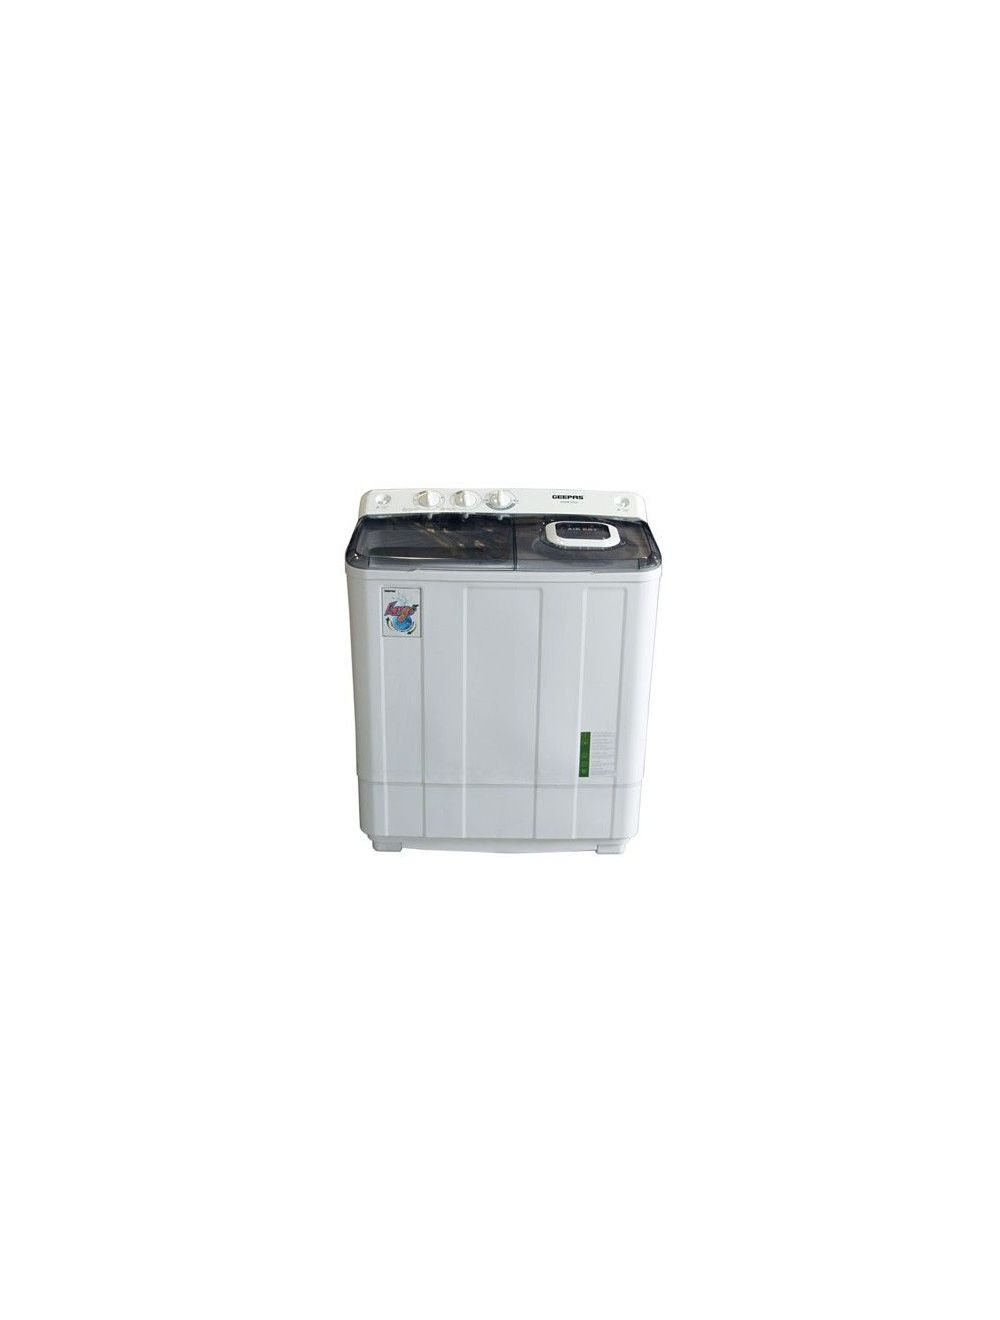 Geepas GSWM18028 Semi Auto Washing Machine, 6.5 kg